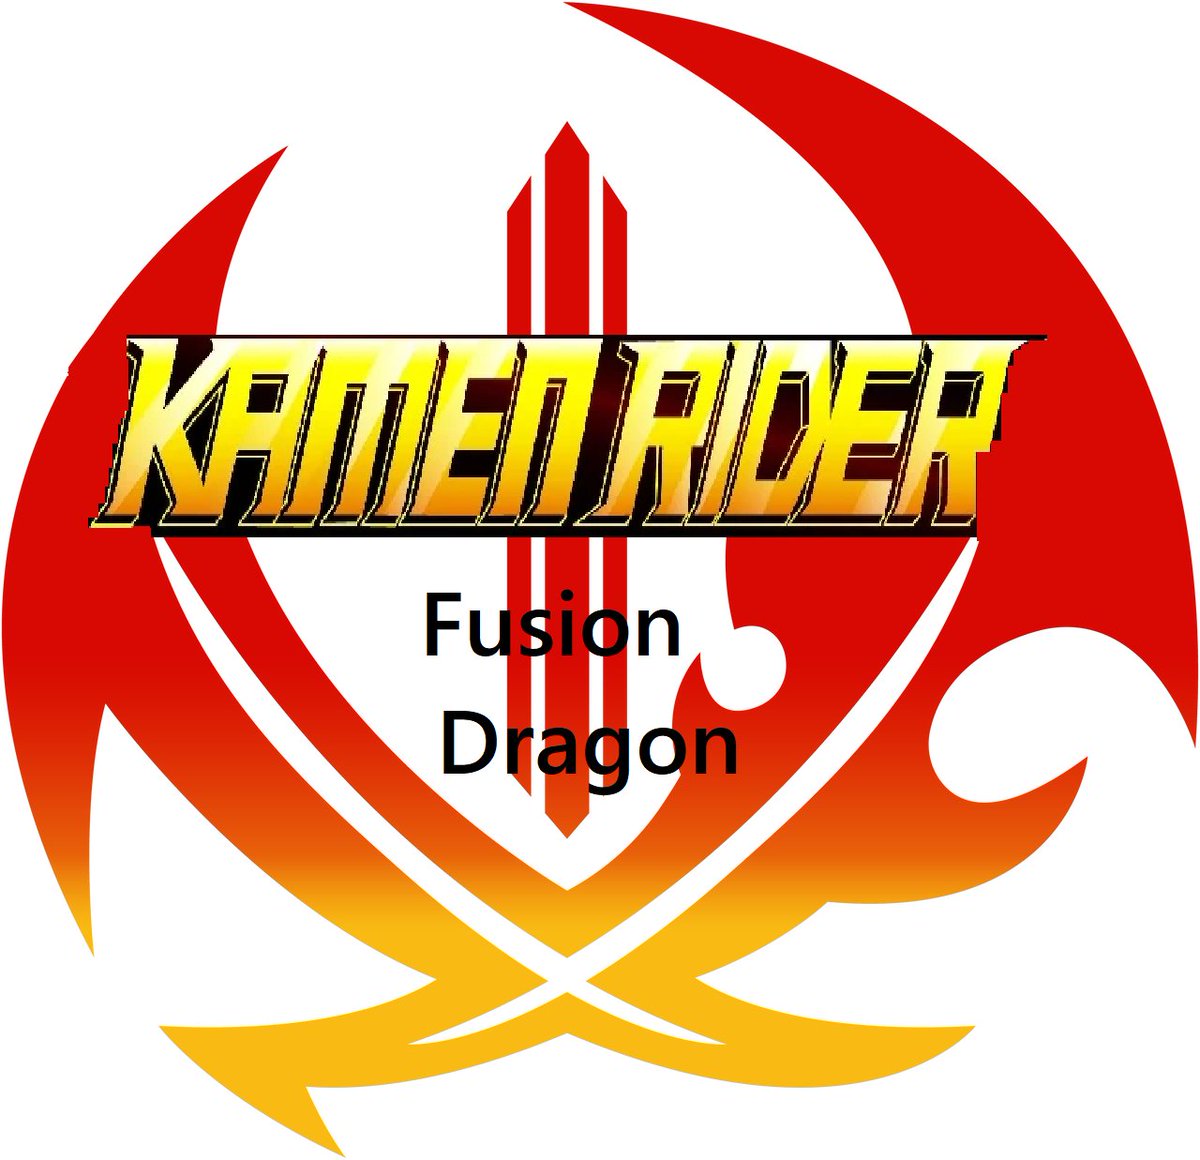 Unofficial Logo of Kamen Rider Fusion Dragon!!!! #KamenRiderFusionDragon #KamenRiderSaber #kamenrider @KamenRiderDaily @TokuNation @tokushoutsu @TheTokuNet @RangerBoard